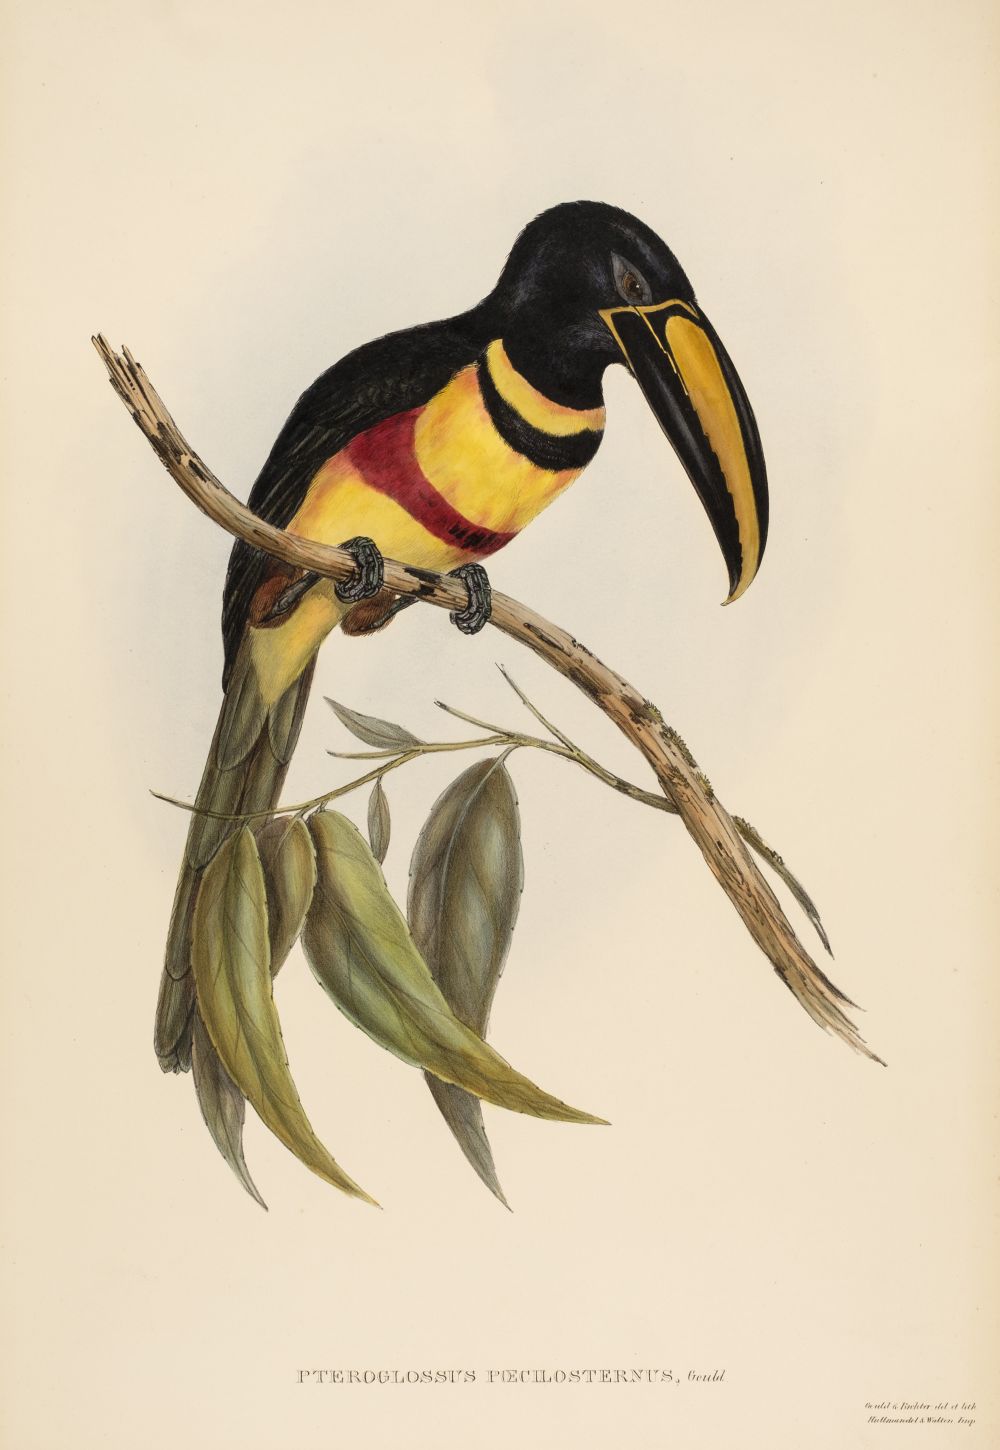 * Gould (John, 1804-1881). Pteroglossus Poecilosternus, 1833-4